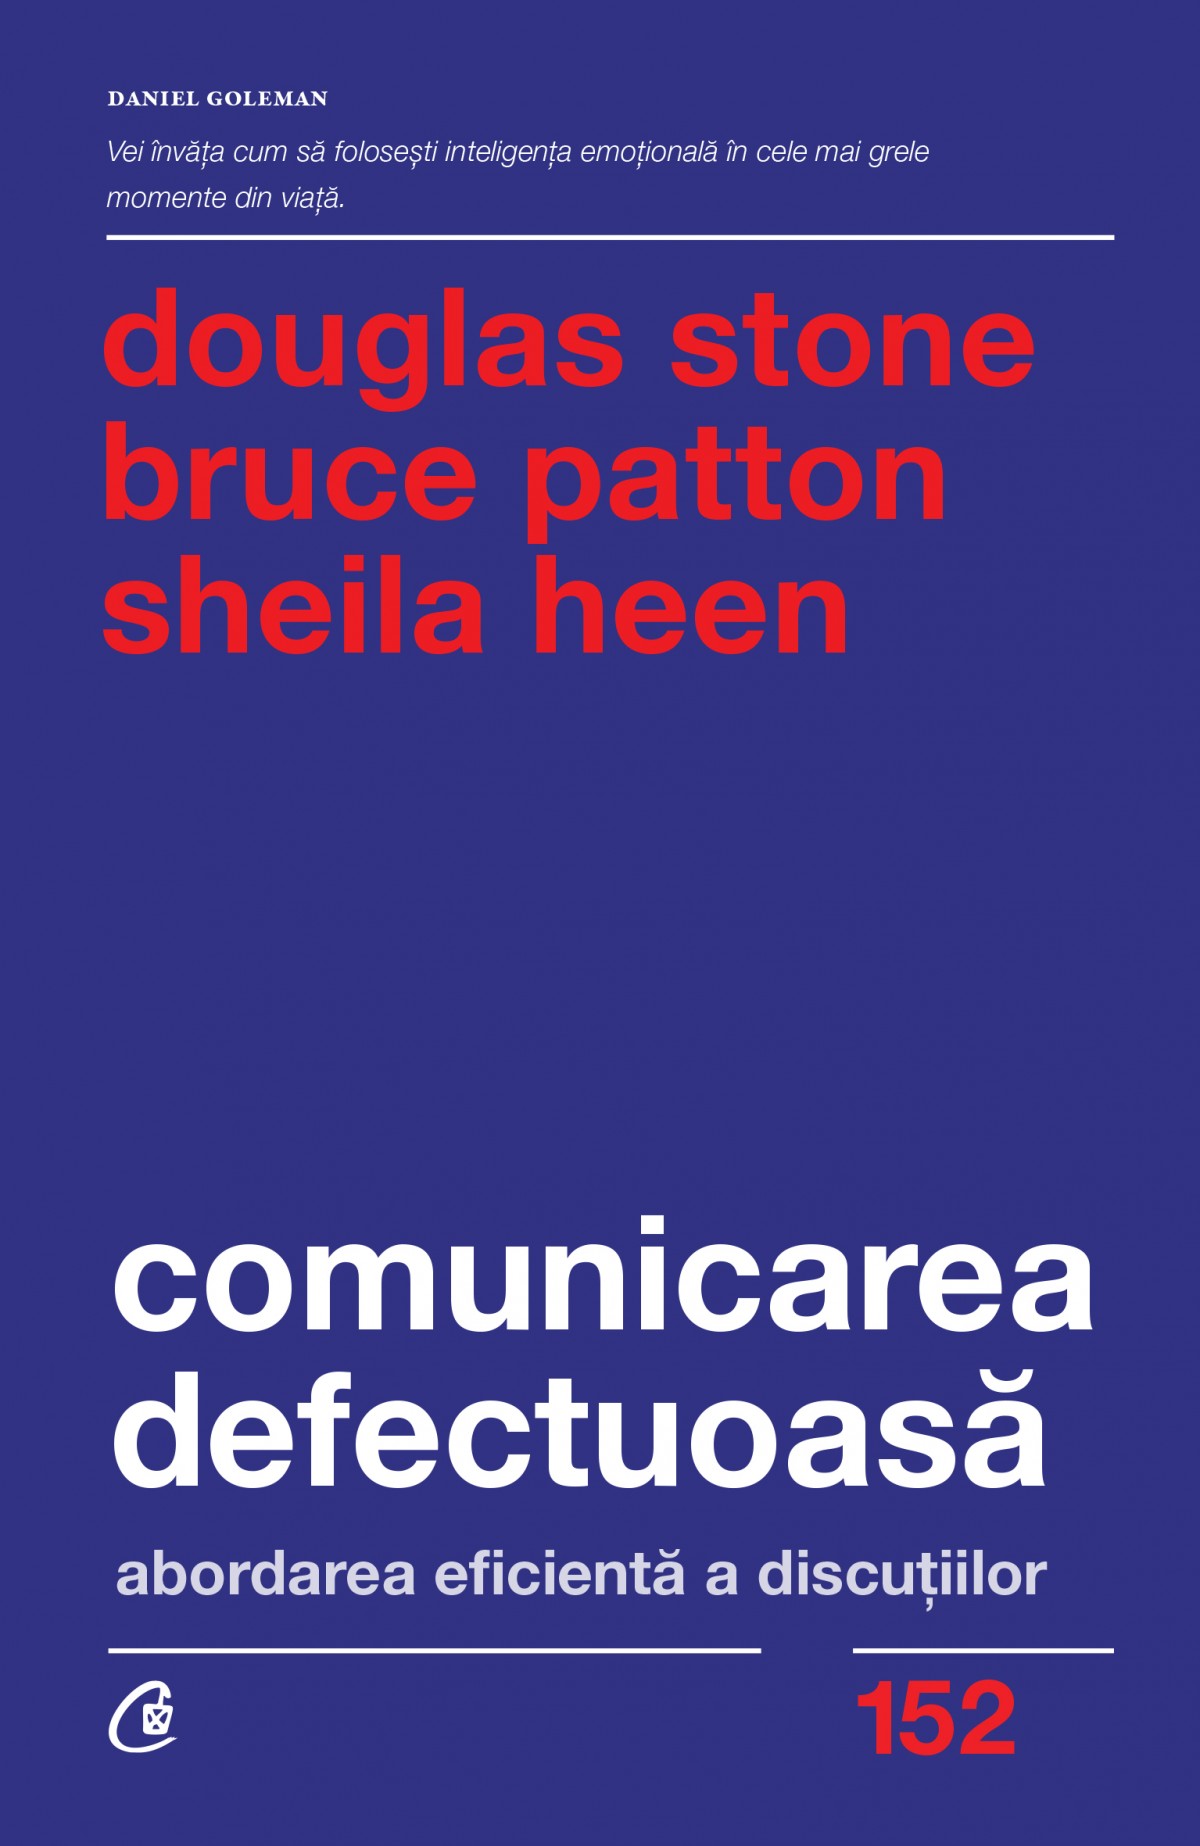 Comunicarea defectuoasa | Sheila Heen, Douglas Stone, Bruce Patton carturesti.ro poza bestsellers.ro